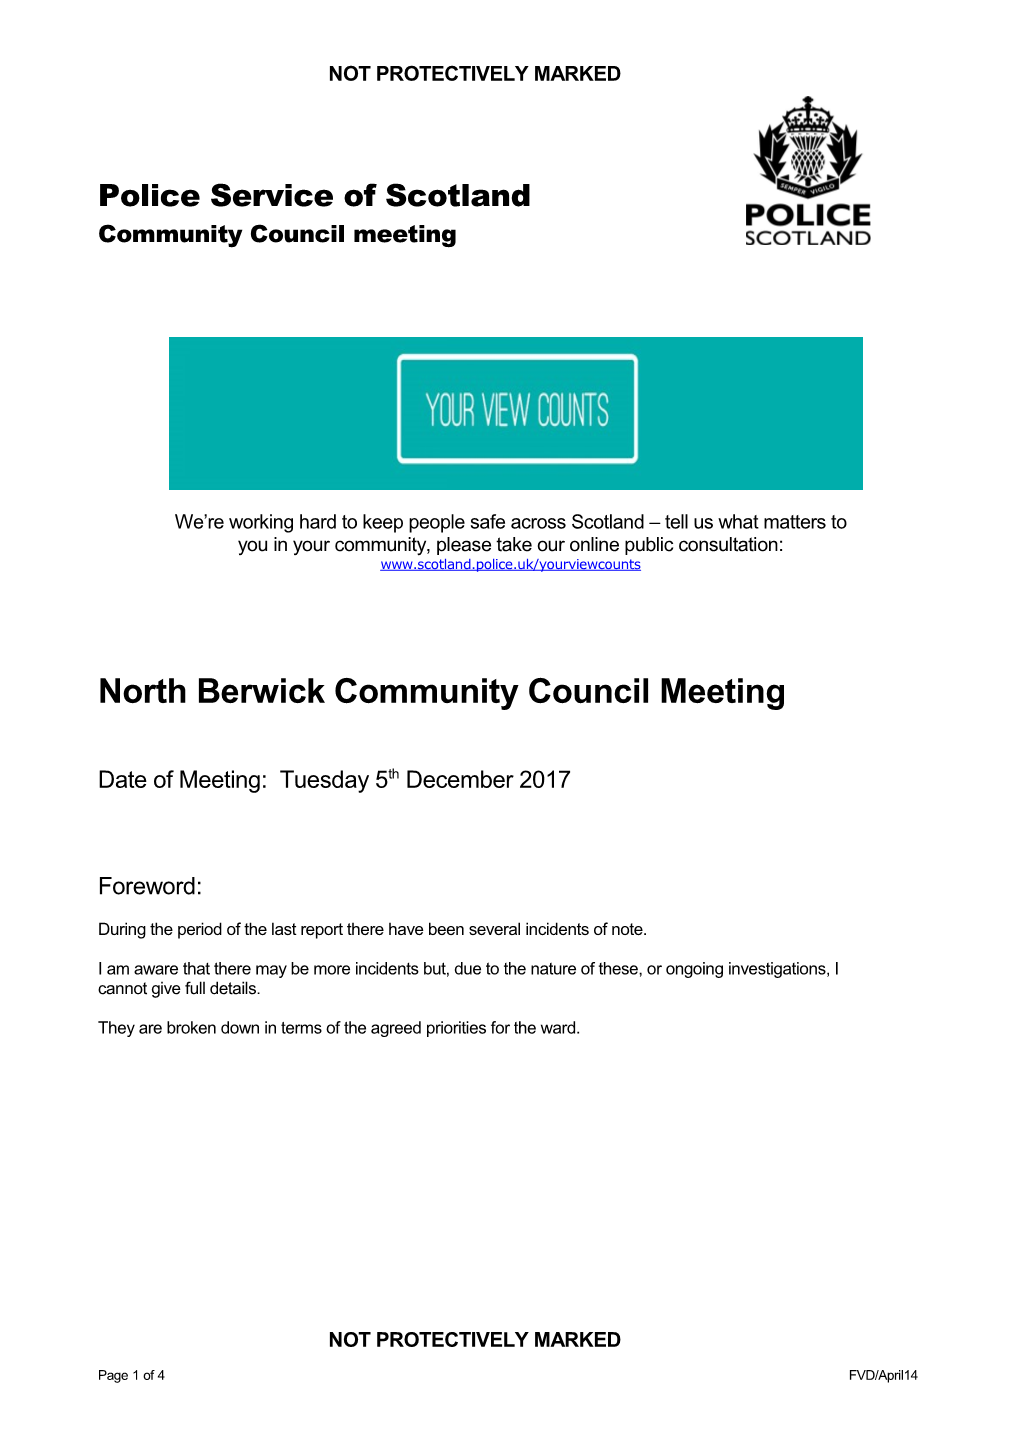 North Berwick Community Council Meeting